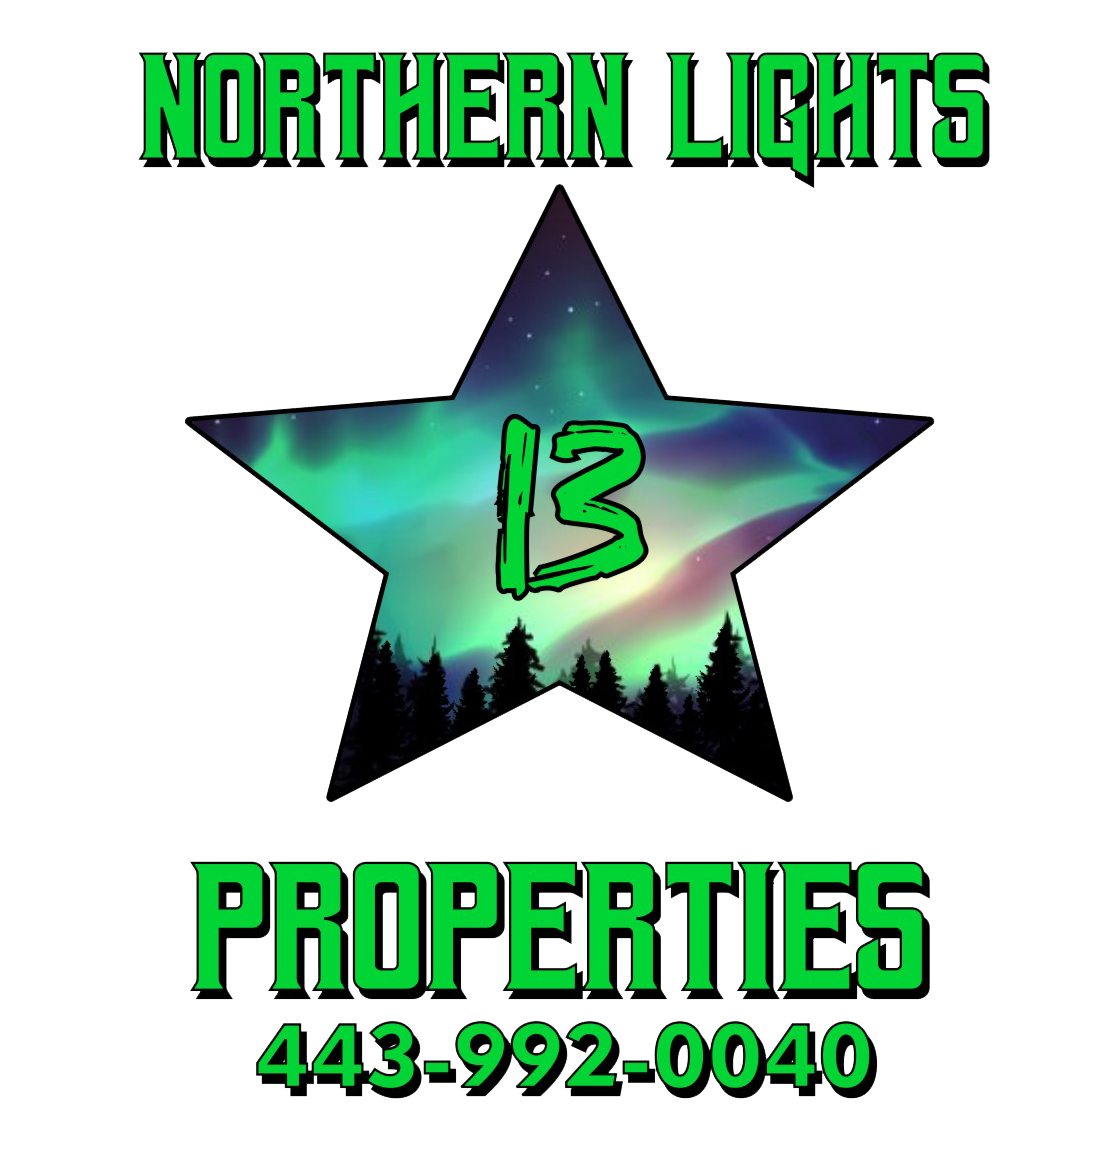 Northern Lights 13 Properties